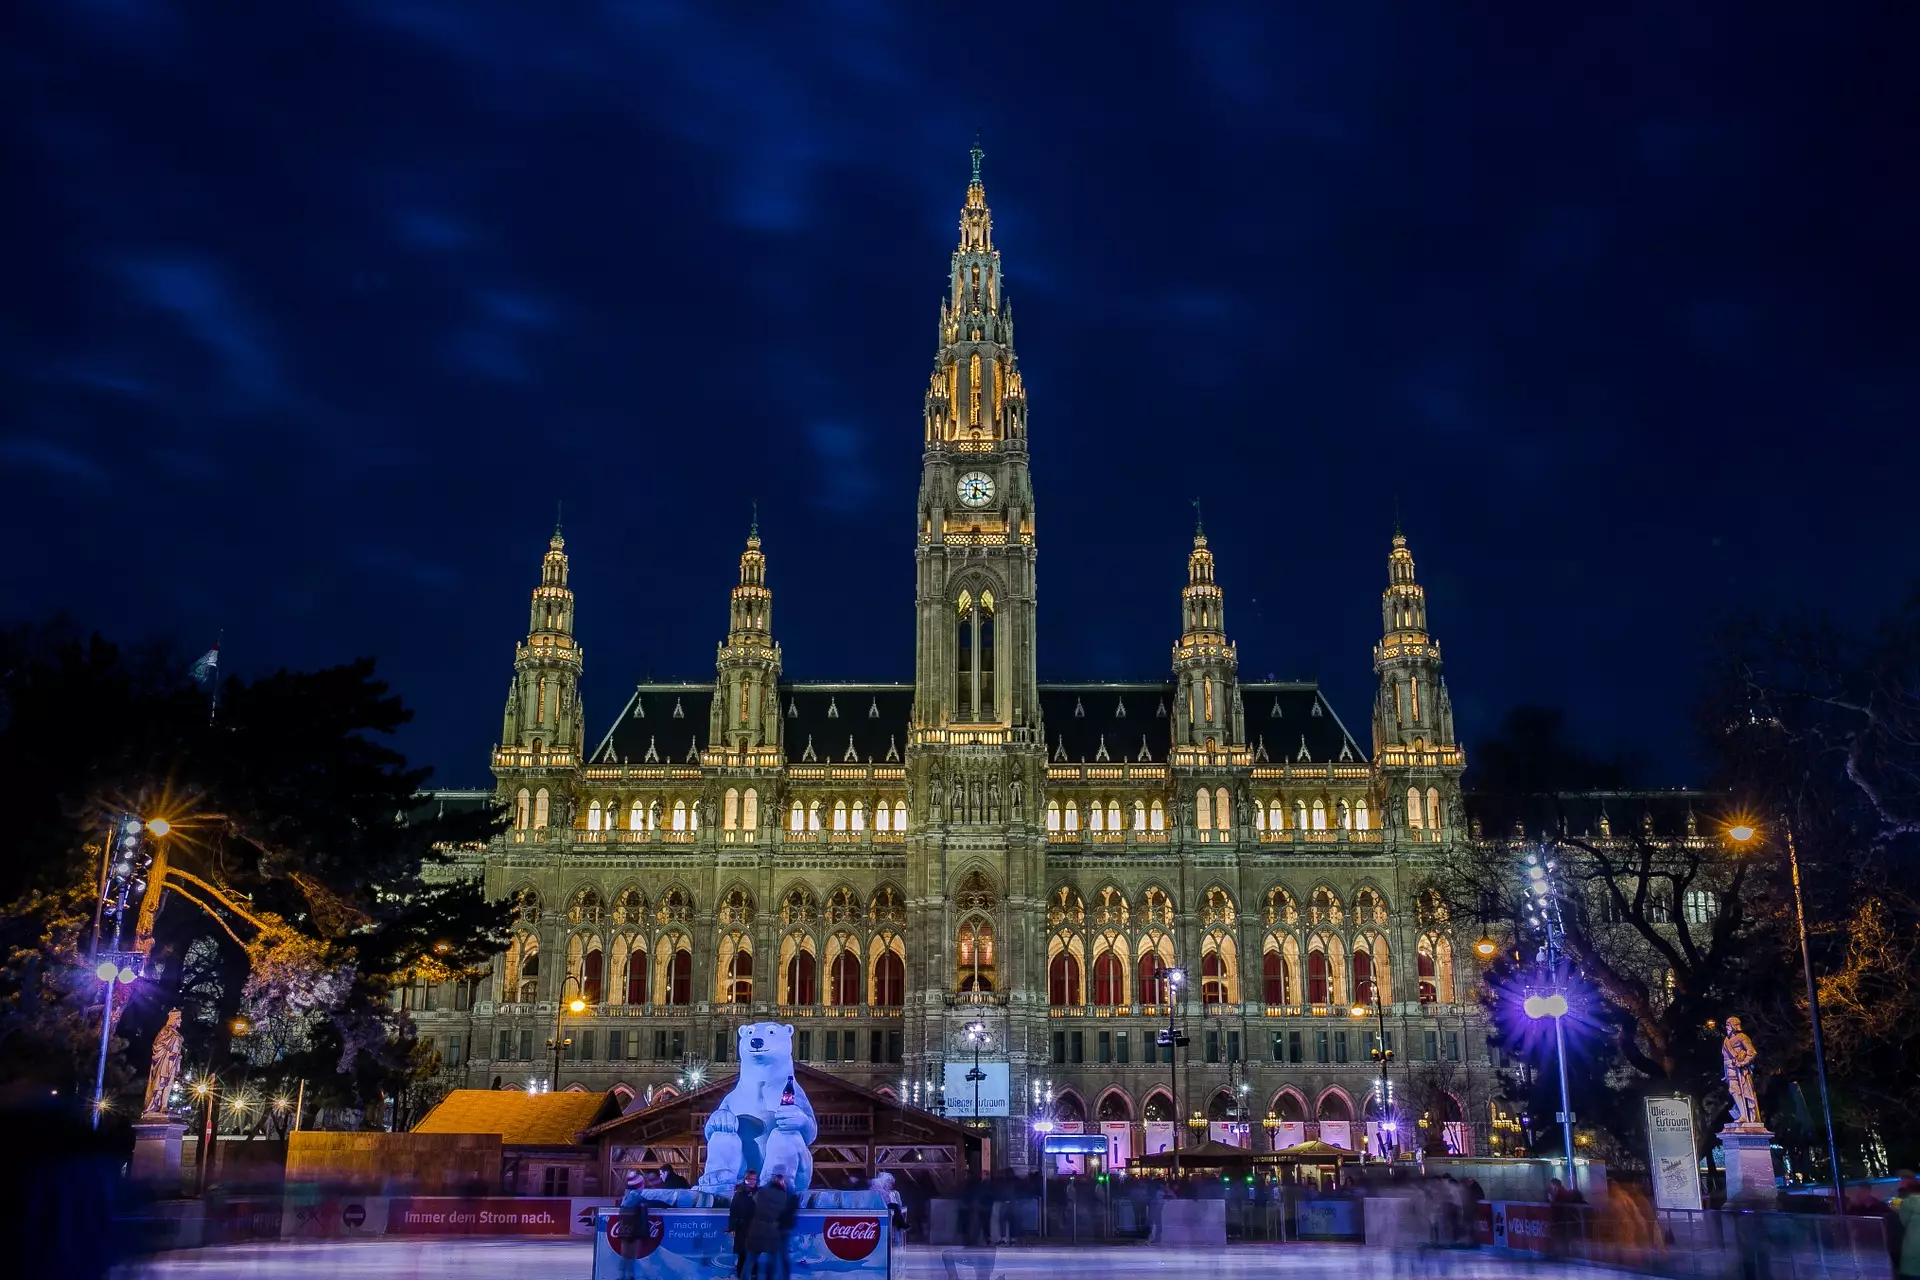 Vienna's baroque palace backdrop to its market looks breathtaking (